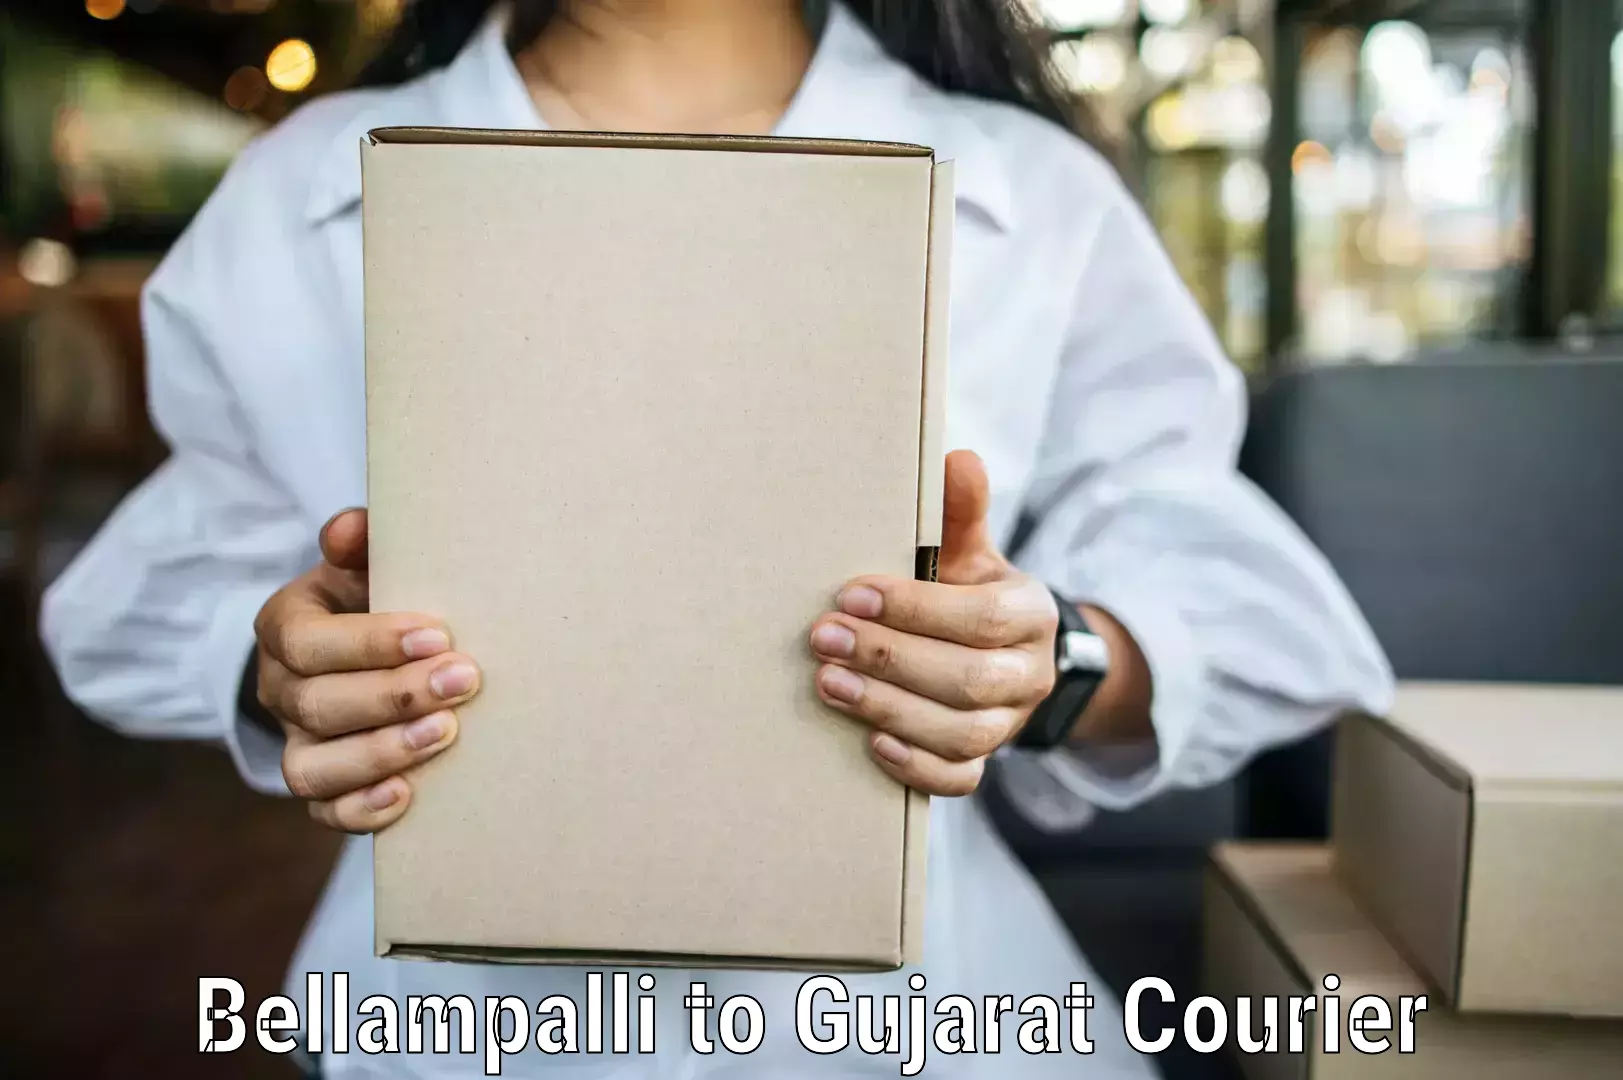 User-friendly delivery service Bellampalli to Vatadara